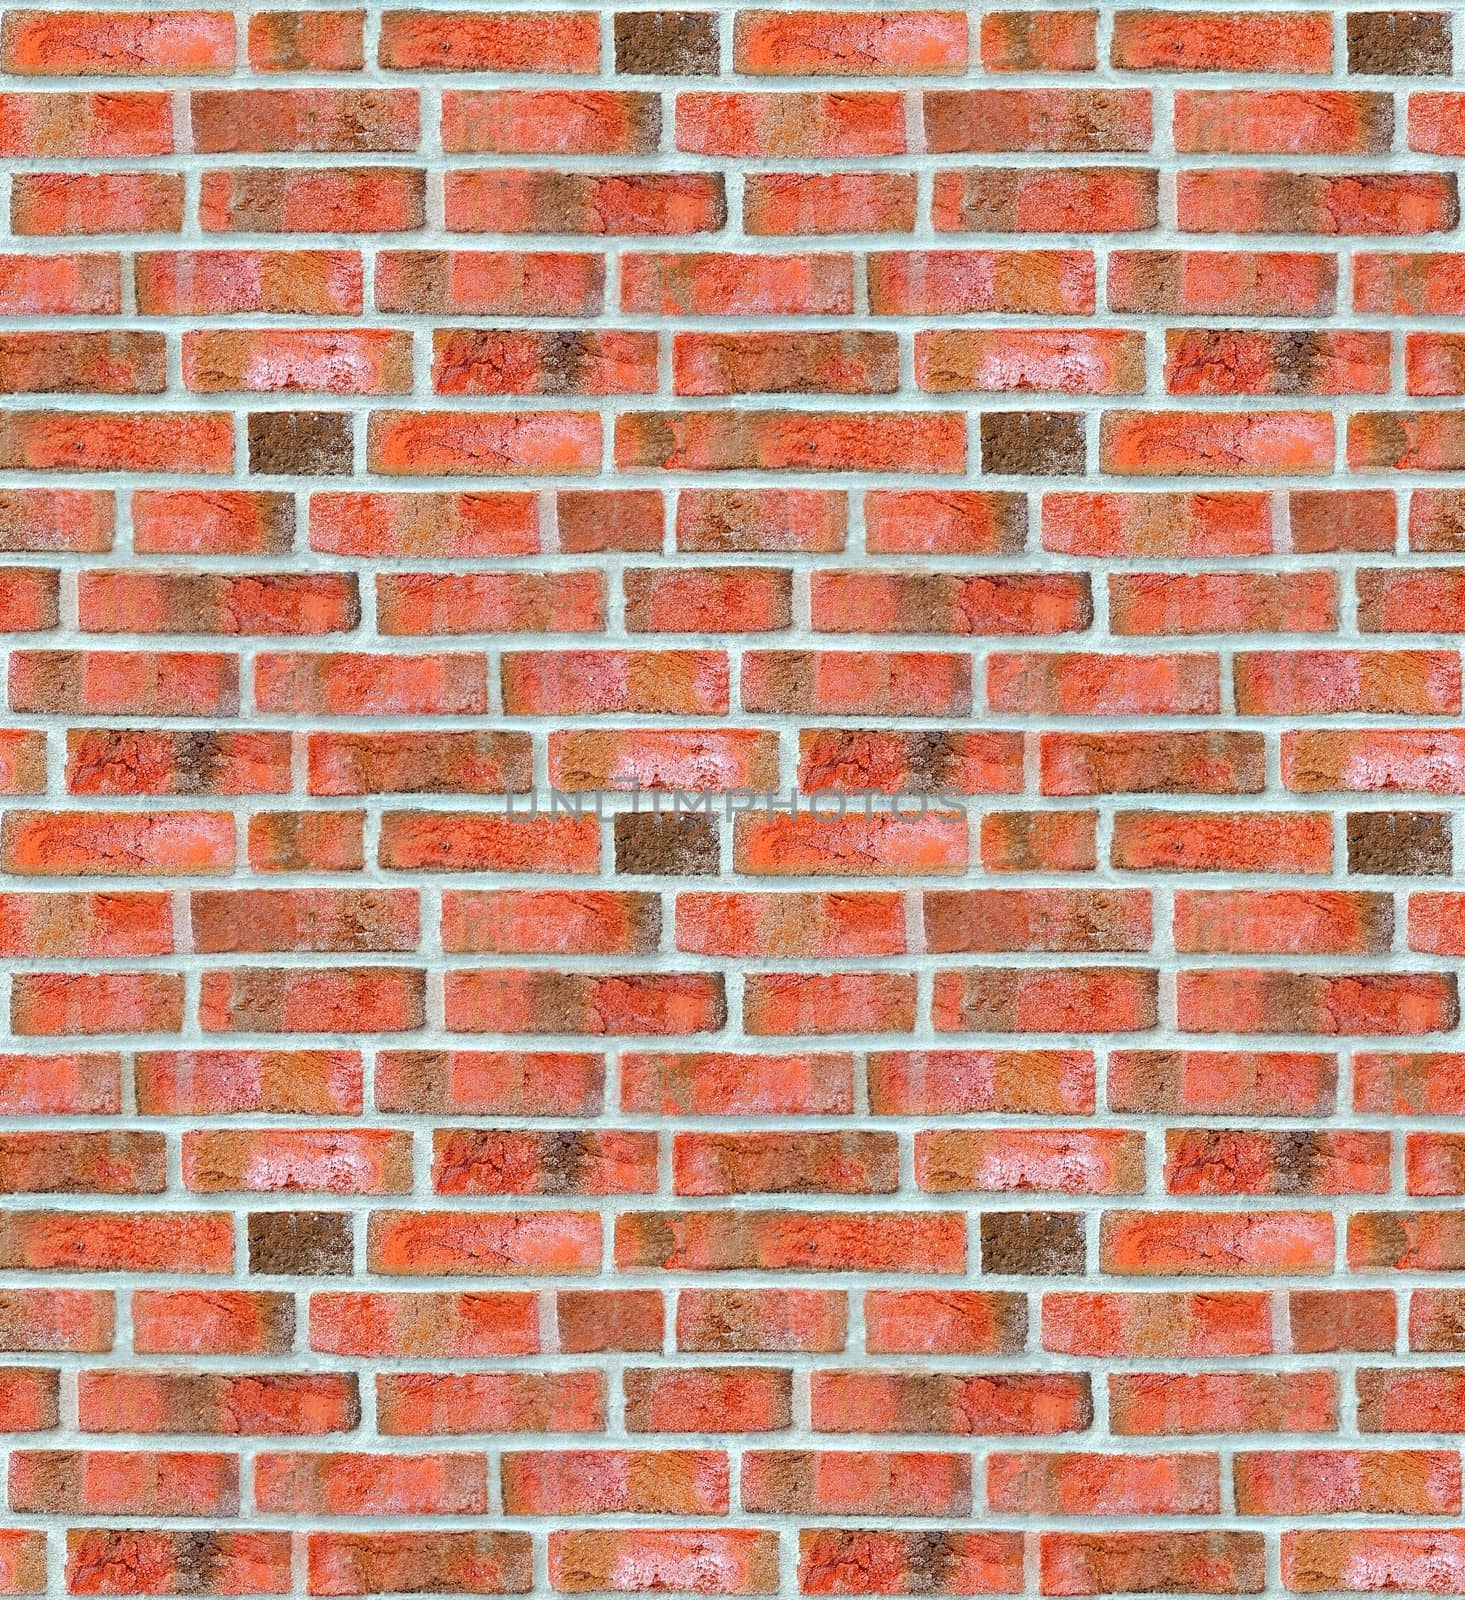 Bricks as seamless tileable texture